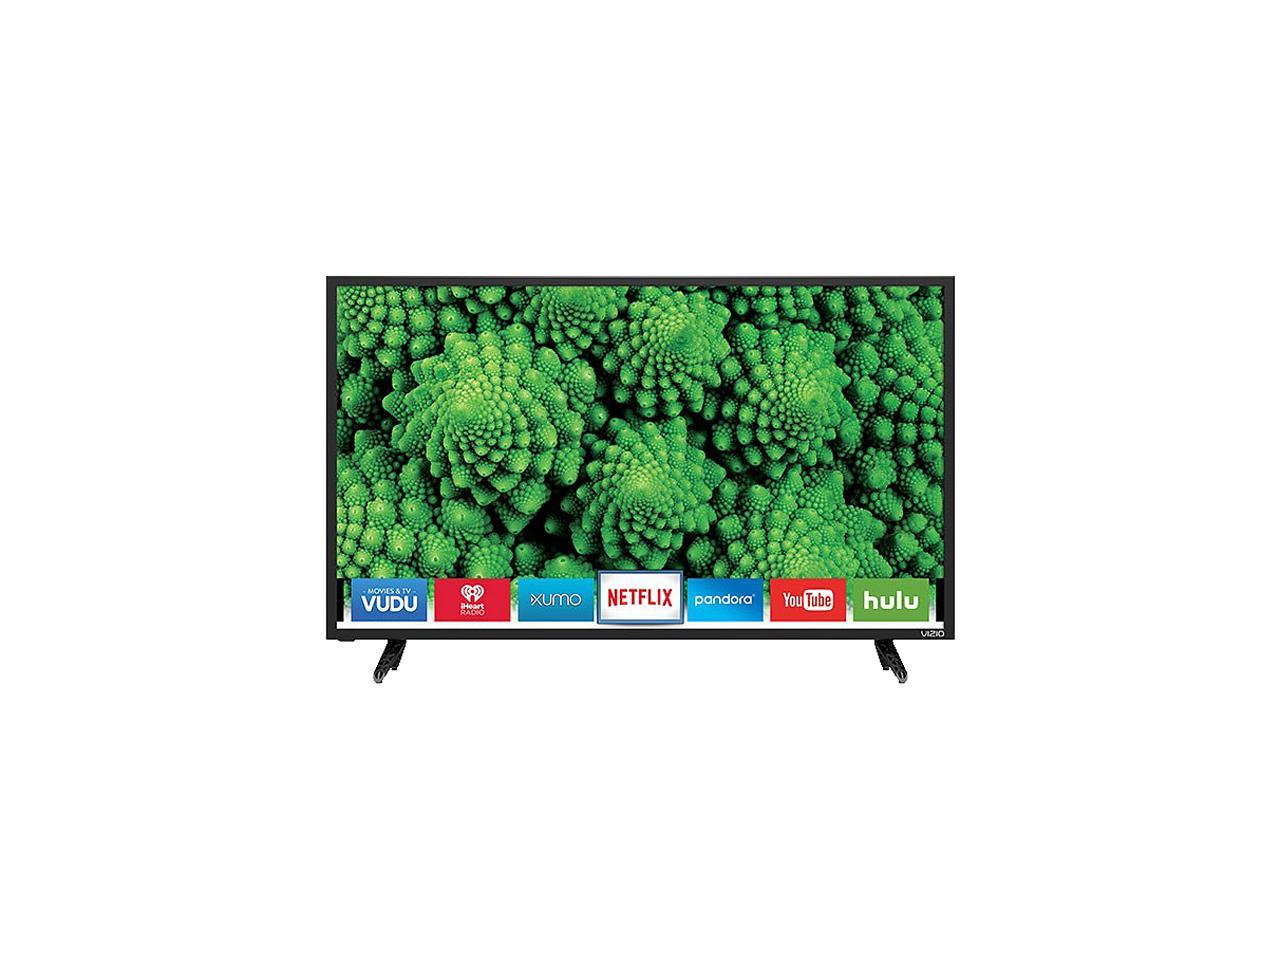 Vizio D39f E1 D Series 39 Inch Full Array 1080p Hd Smart Led Tv 2017